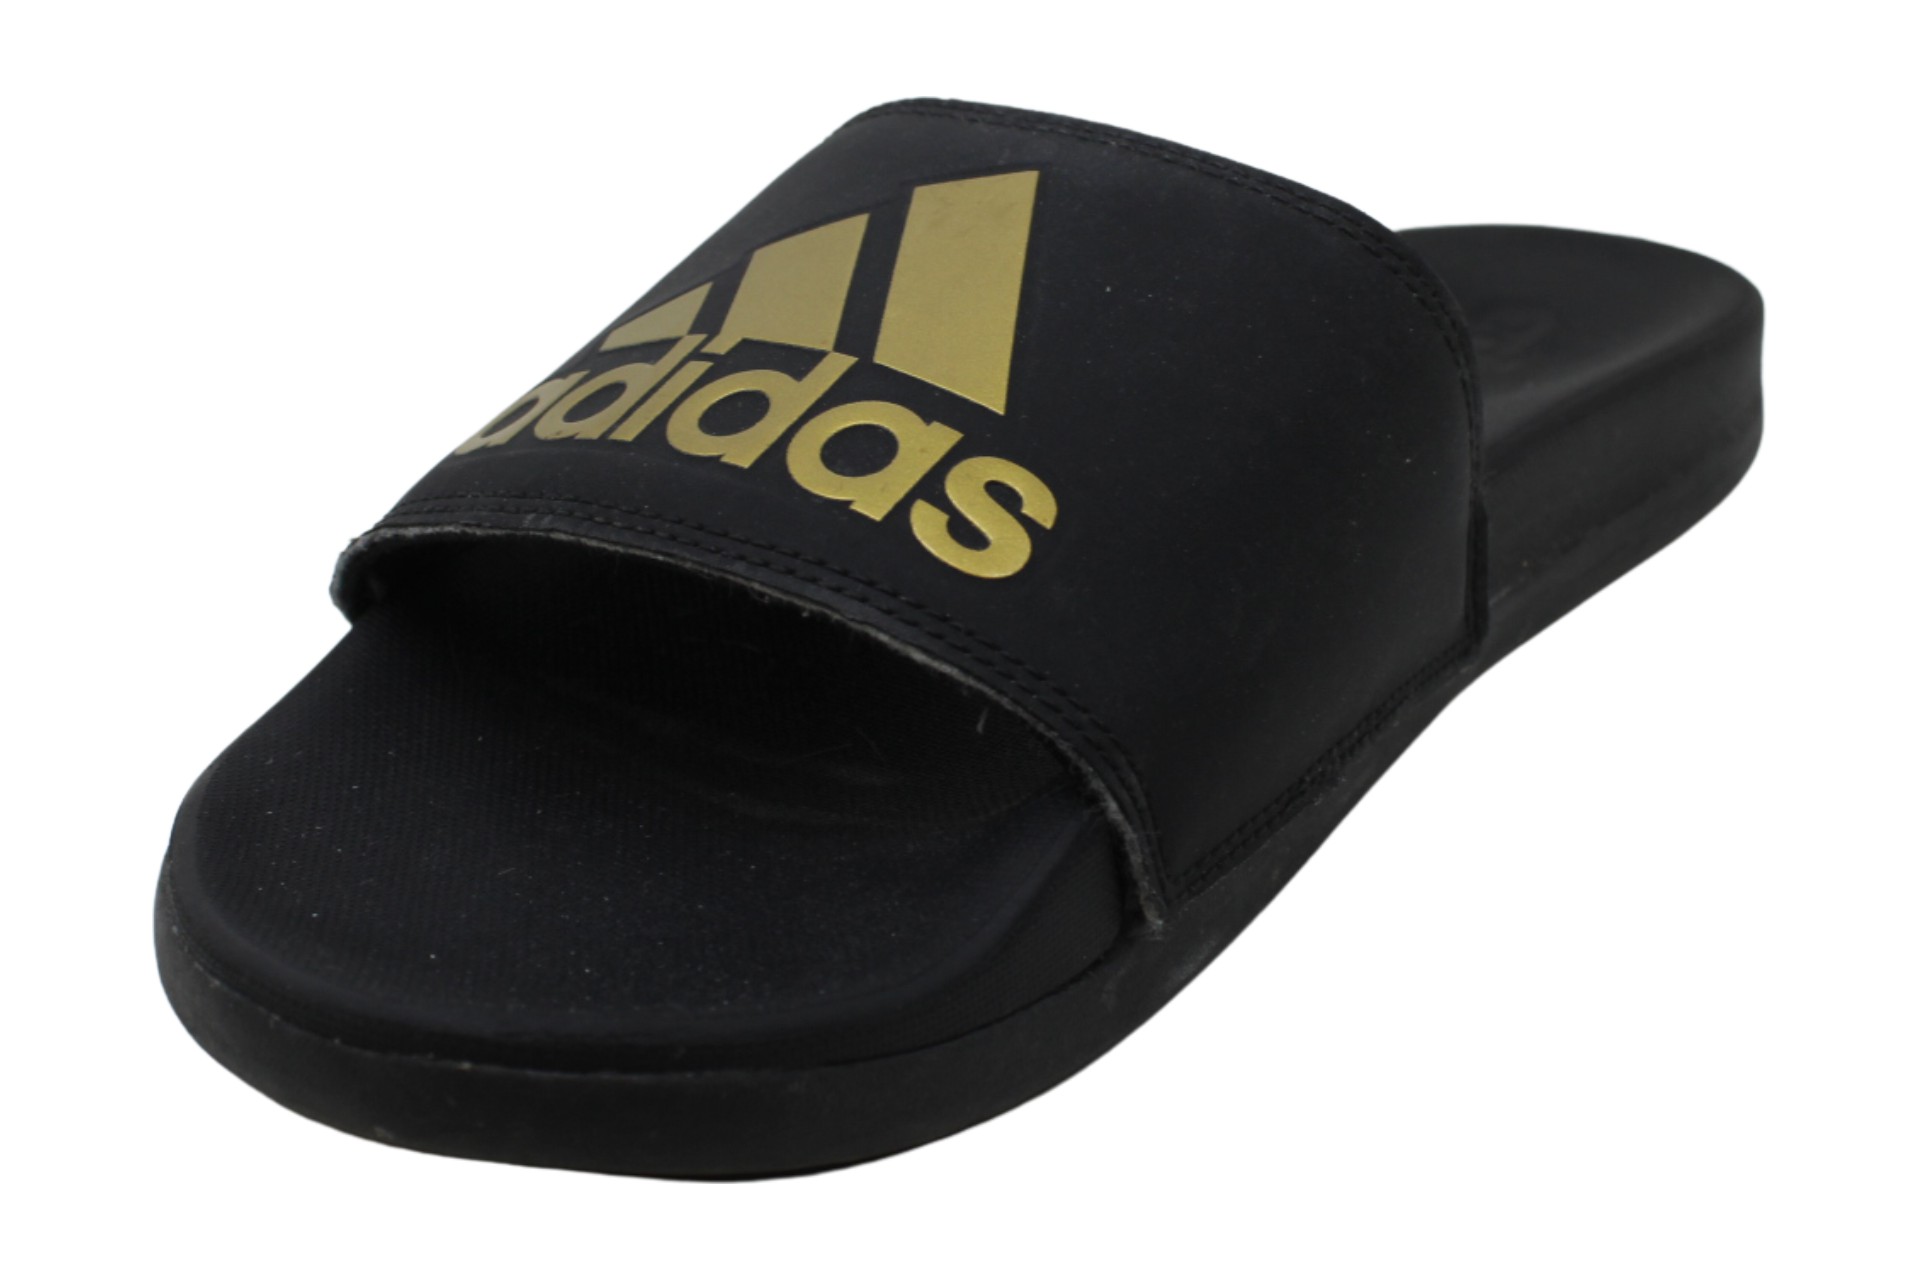 Adidas Women's Shoes Slides, MultiColor, Size 8.0 P8AO | eBay